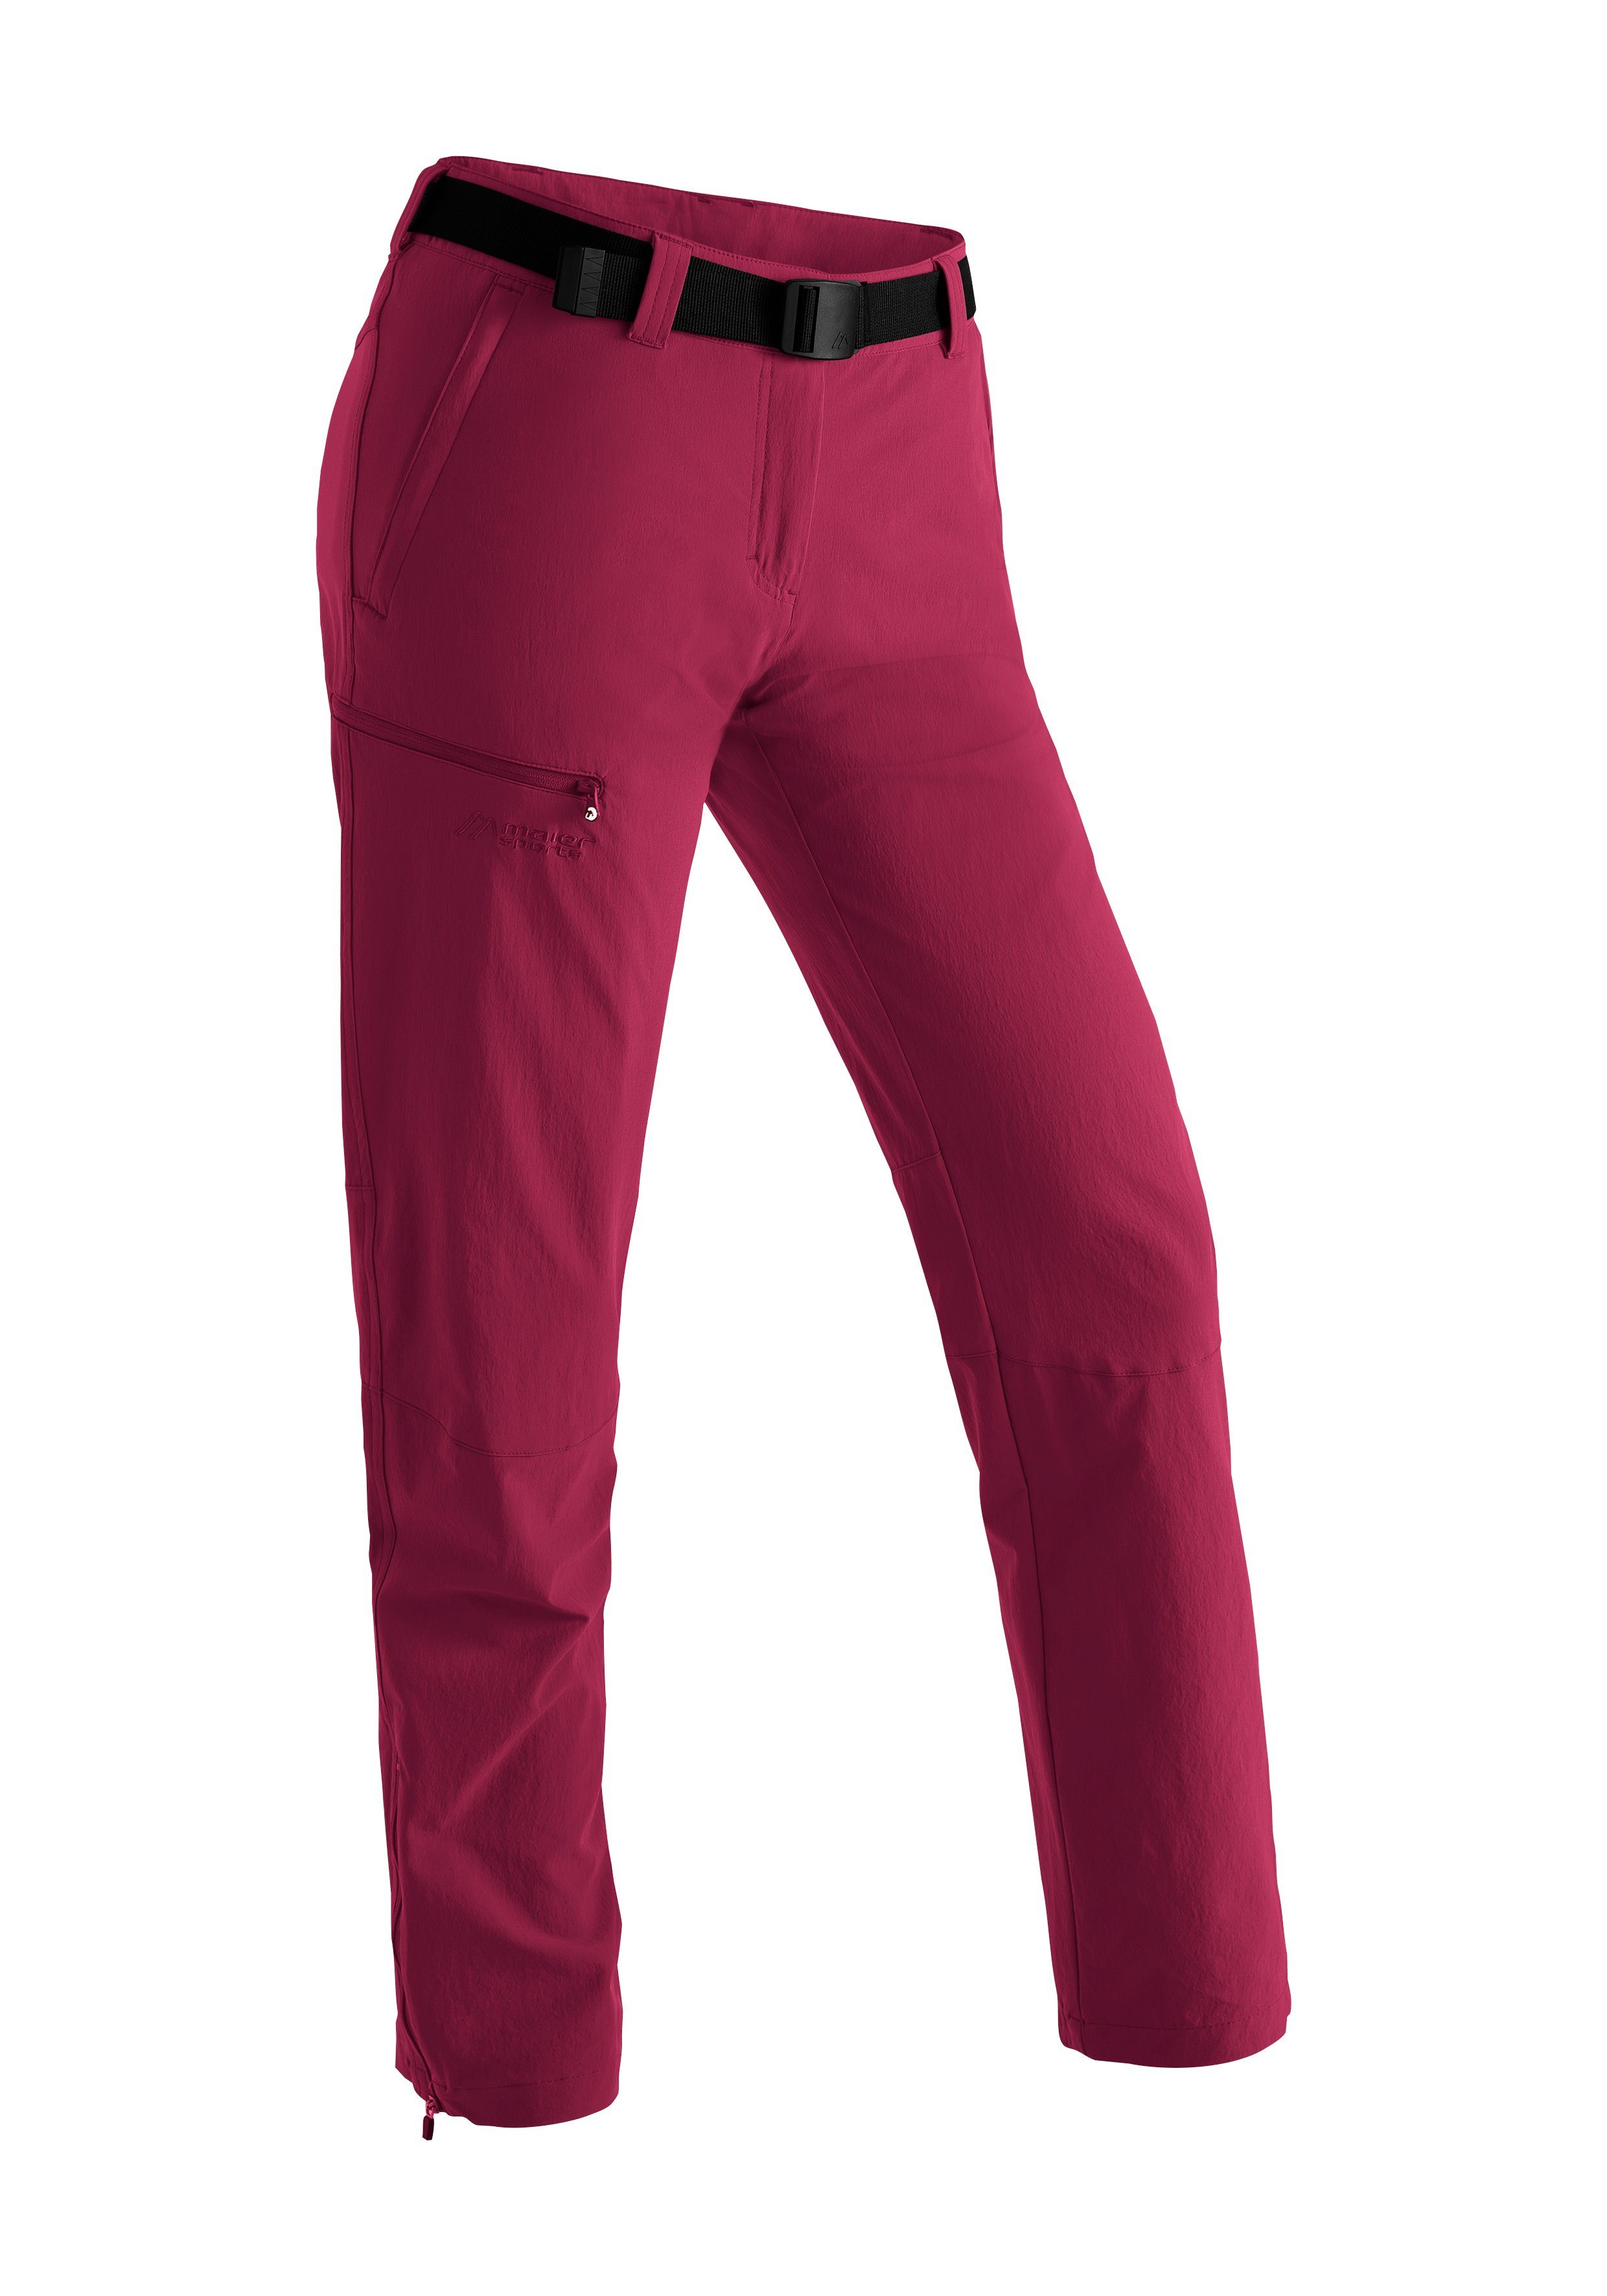 Maier Sports Funktionshose Inara slim Damen Wanderhose, Outdoor-Hose aus elastischem Material purpurrot | 